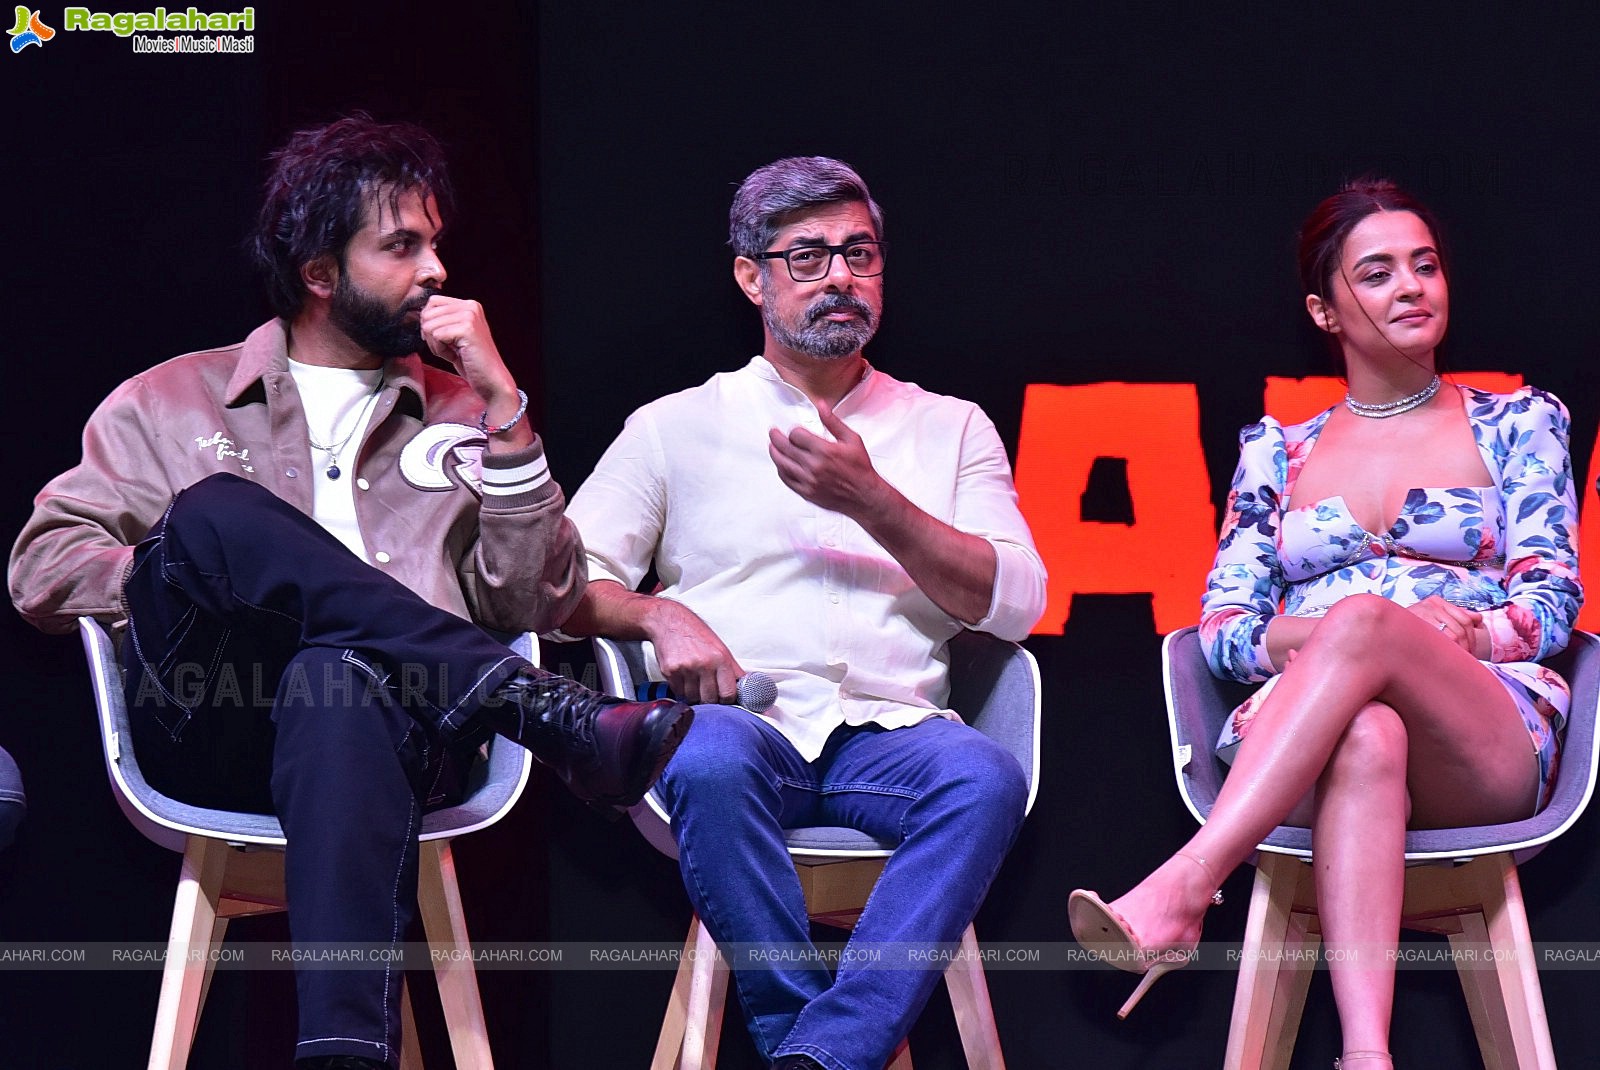 'Rana Naidu' Trailer Launch in Mumbai